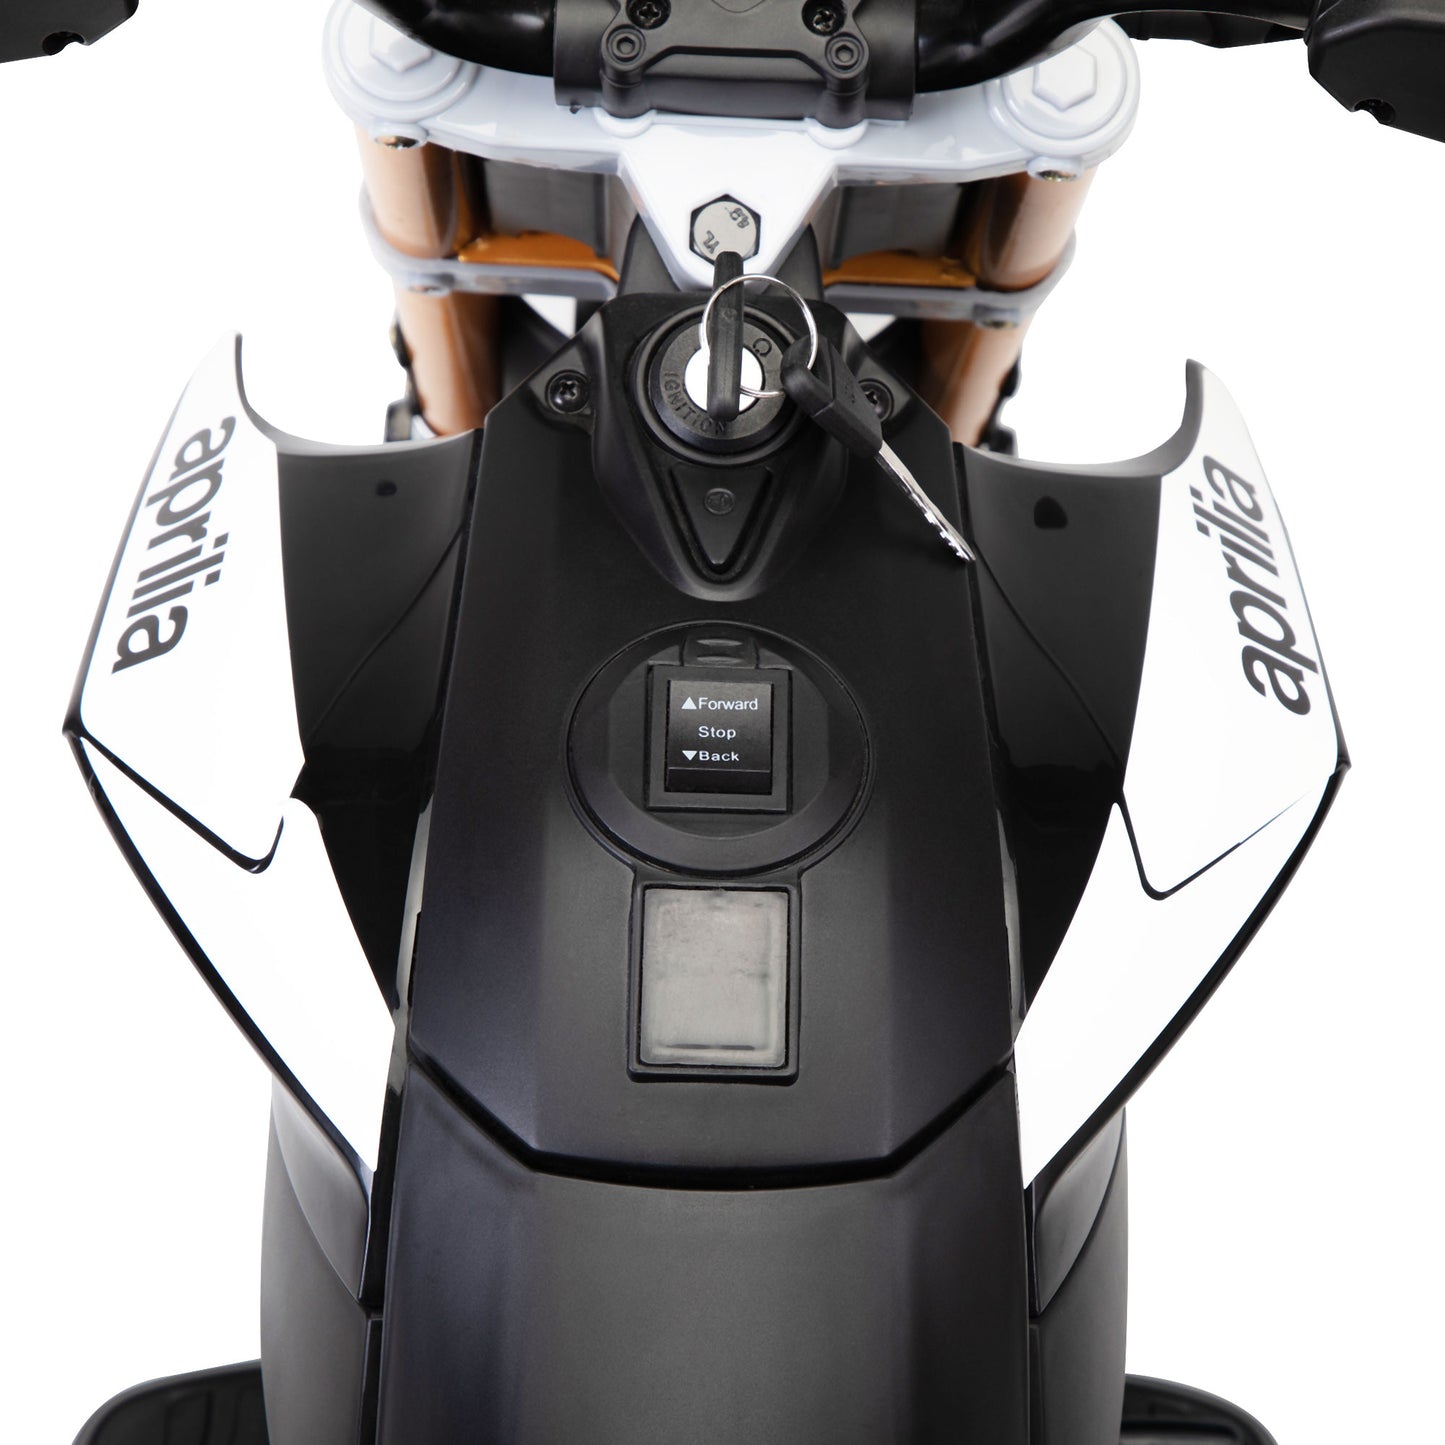 12V Aprilia Licensed Kids Ride On Motorcycle, 4-wheel Electric Dirt Bike with Spring Suspension, LED Lights, USB, MP3, Red